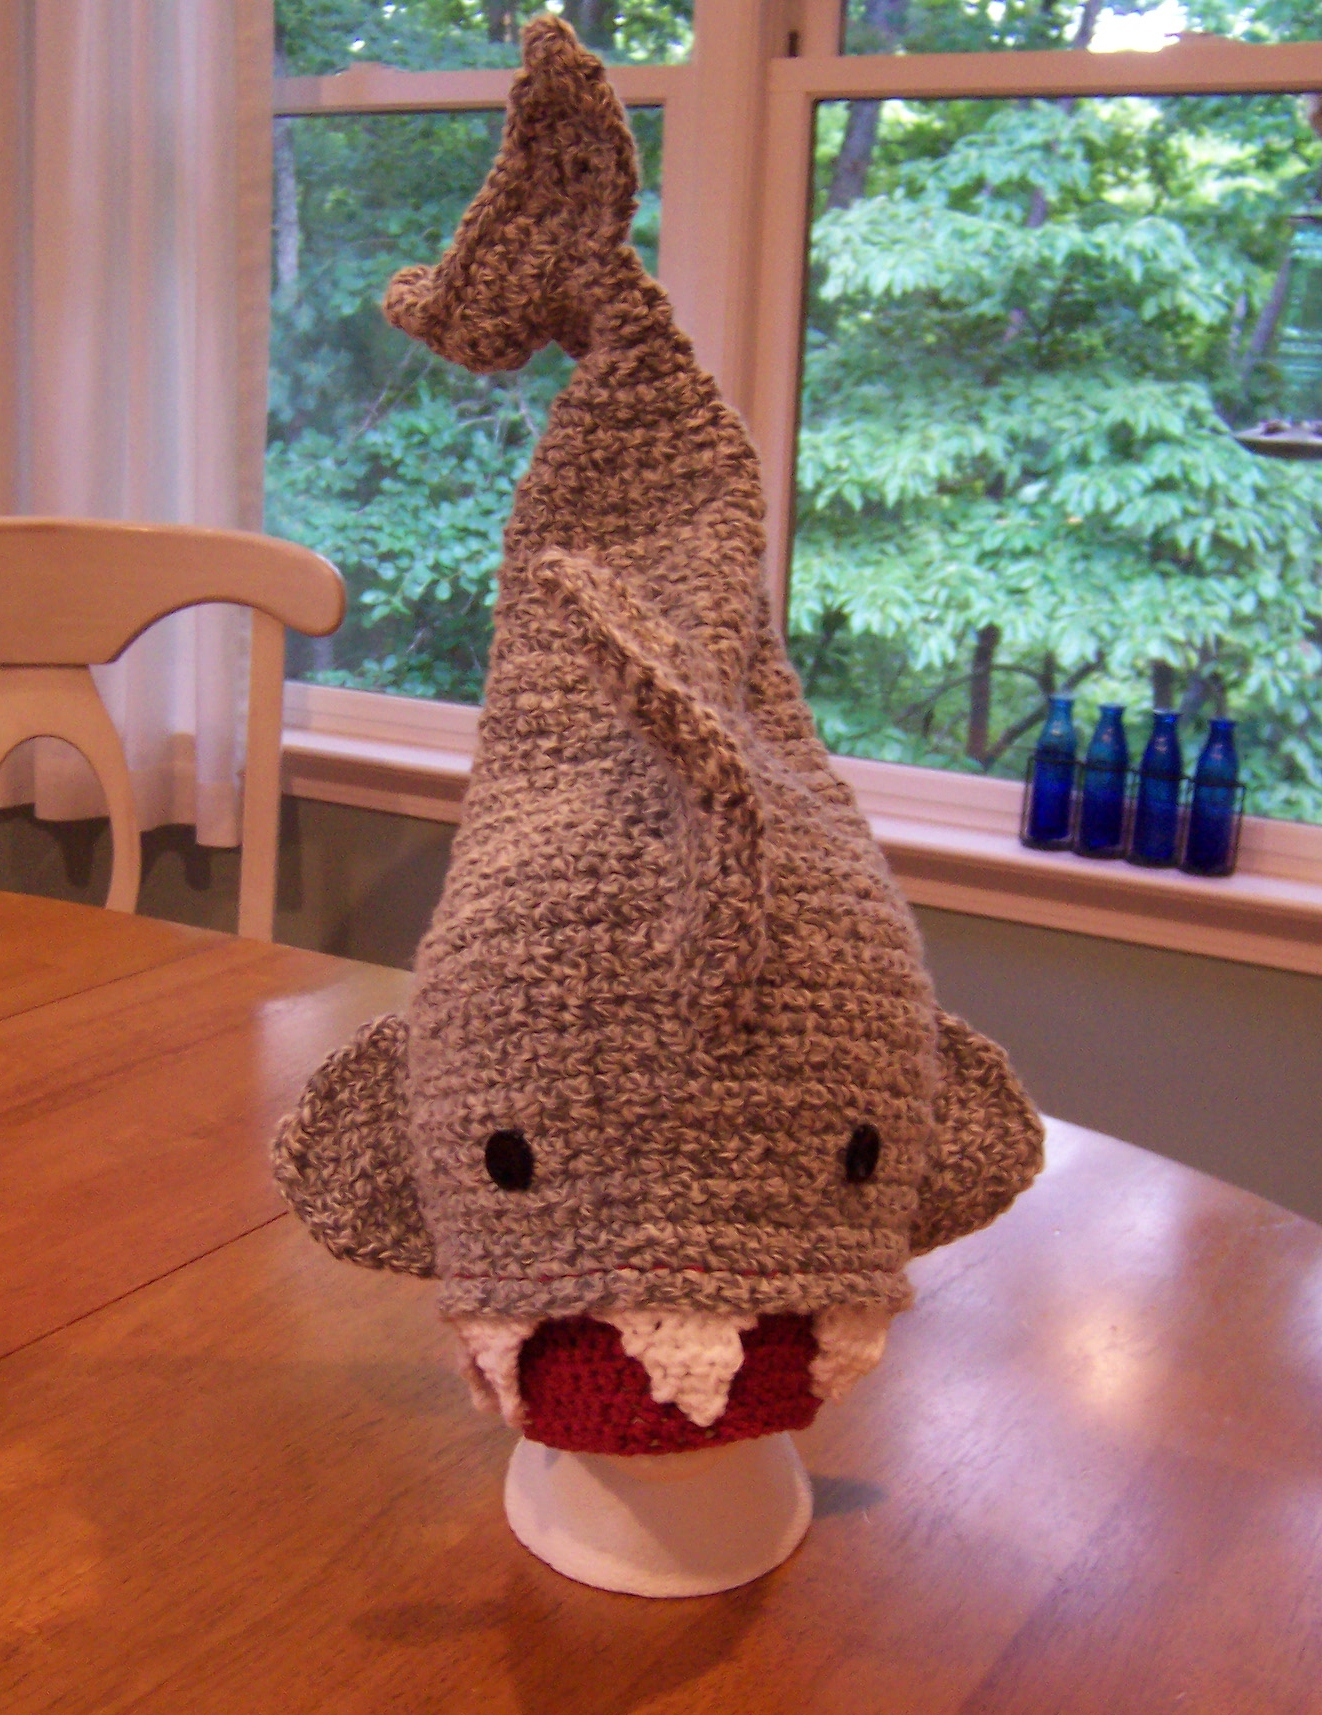 Free Crochet Shark Hat Pattern Its Shark Week Crochet A Shark And Help Halos Of Hope Crochet